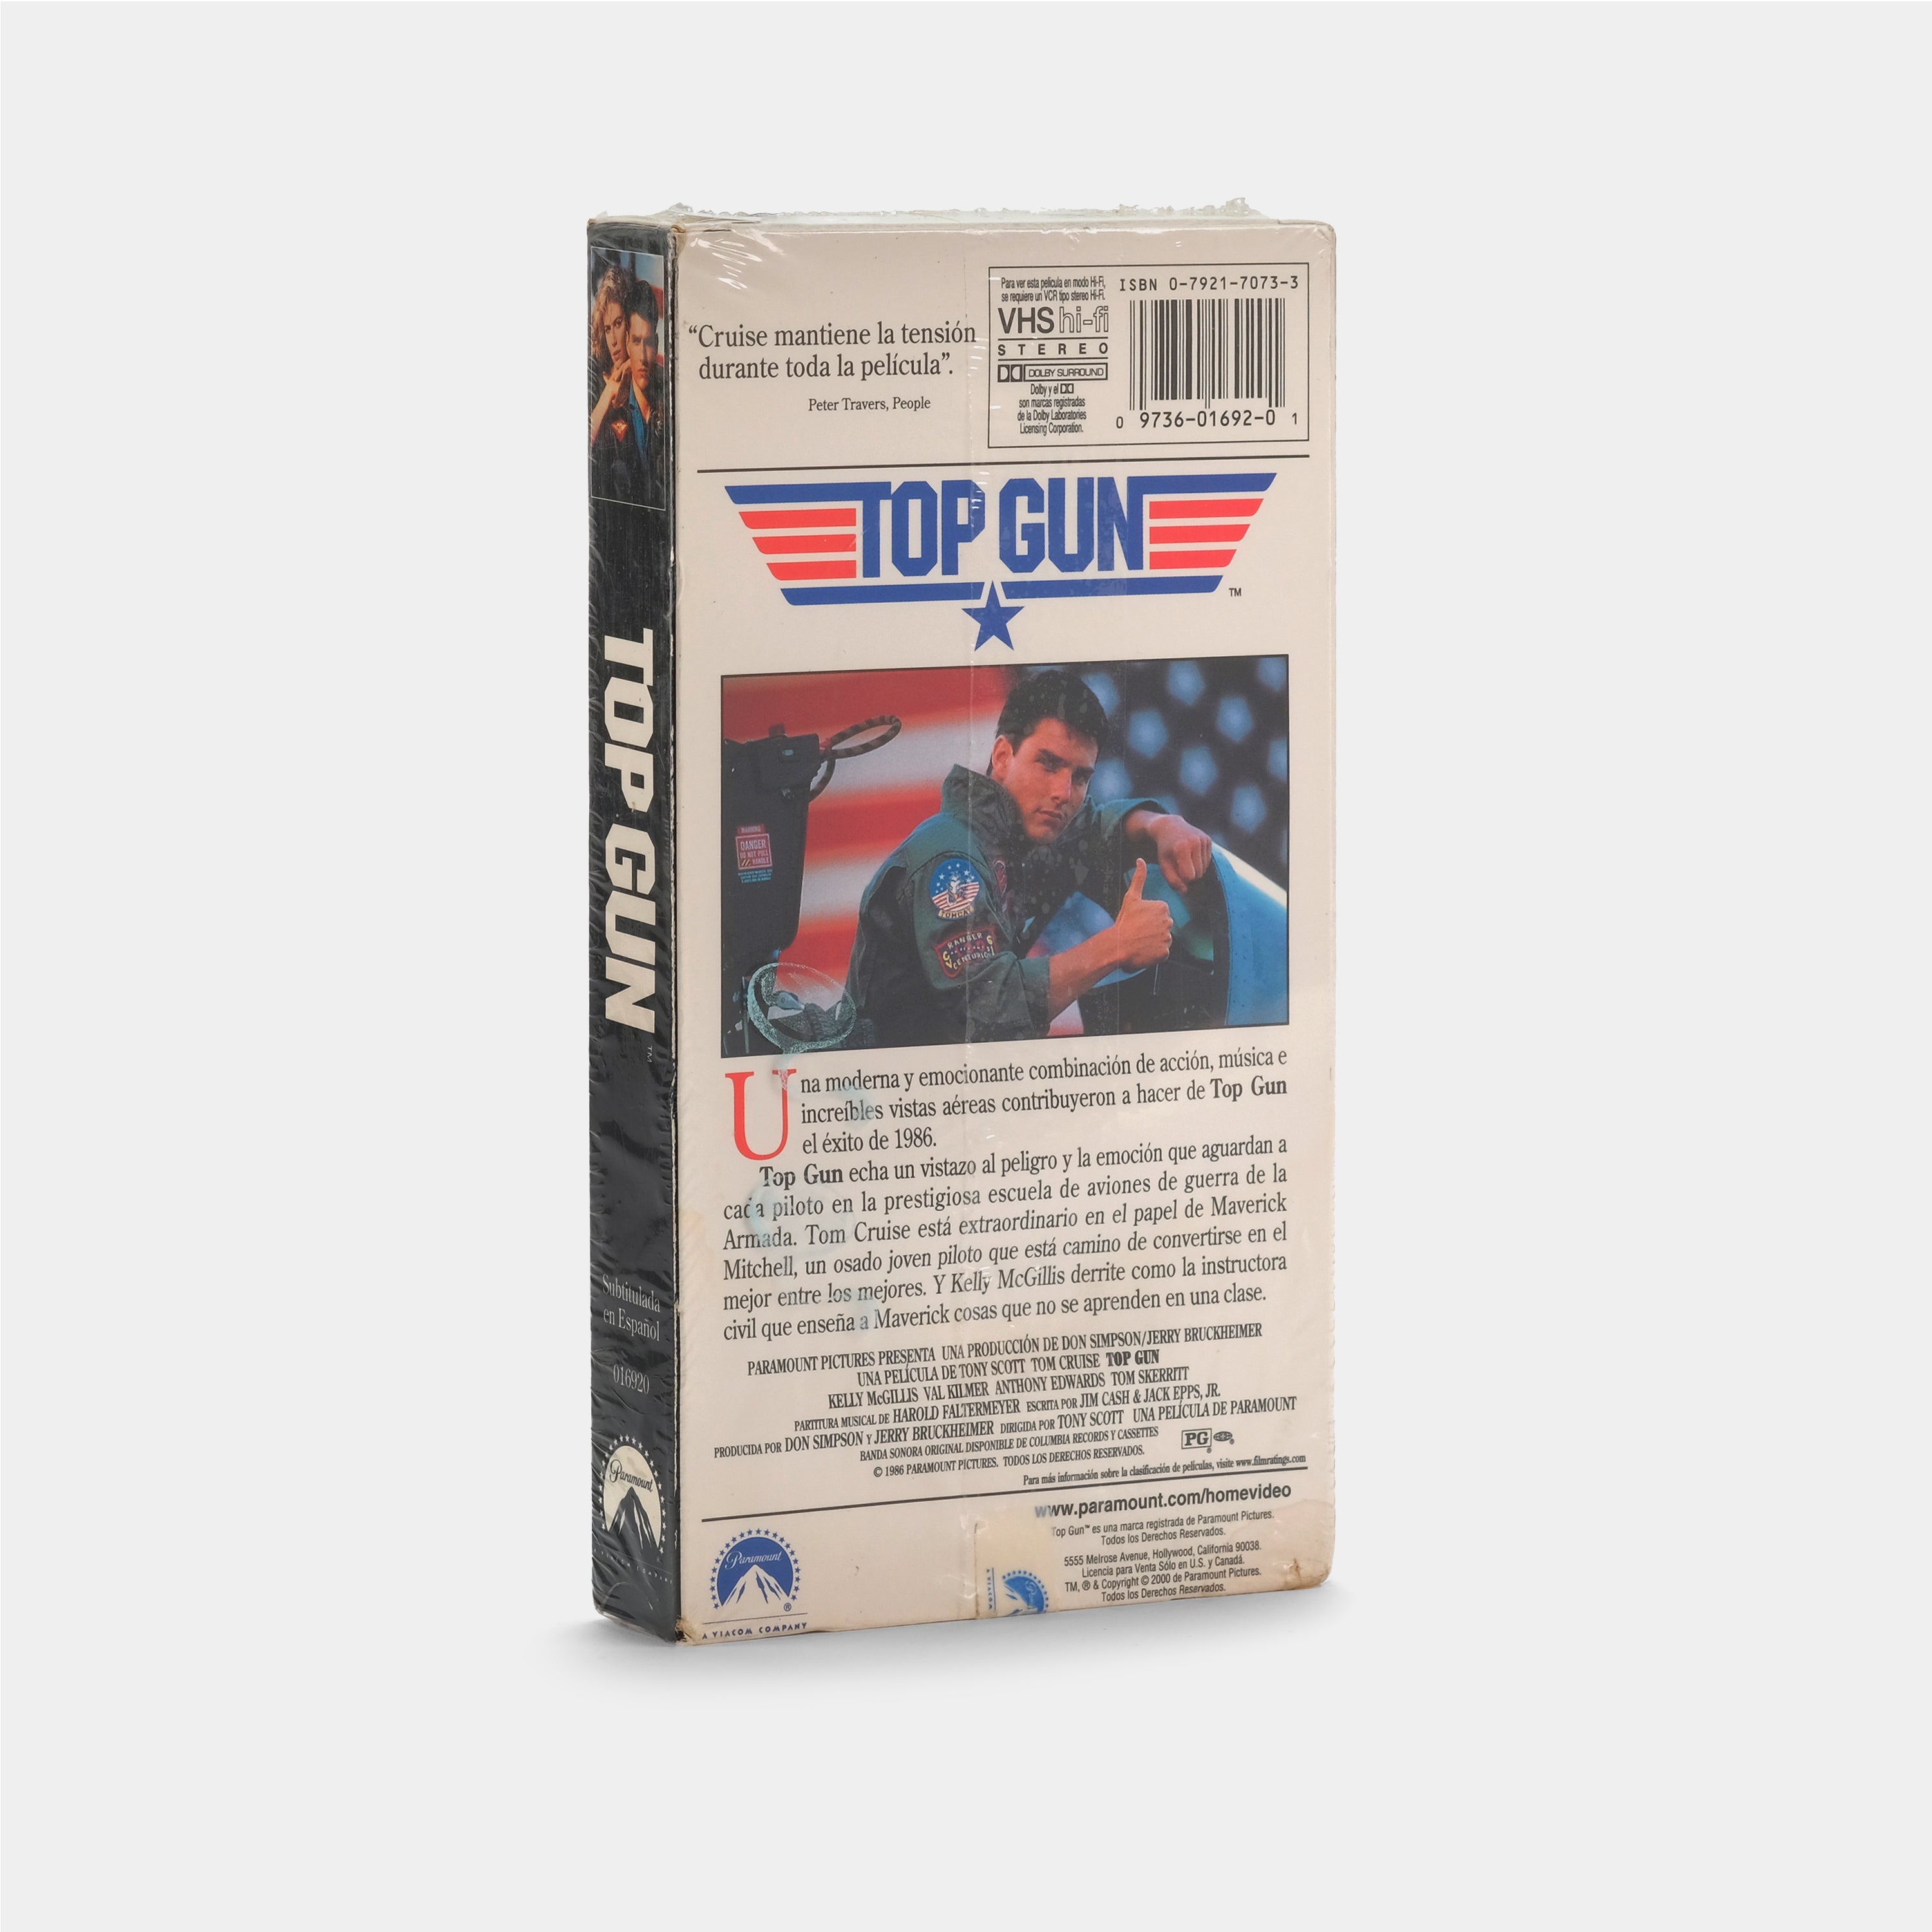 Top Gun (Sealed, Spanish Subtitled) VHS Tape